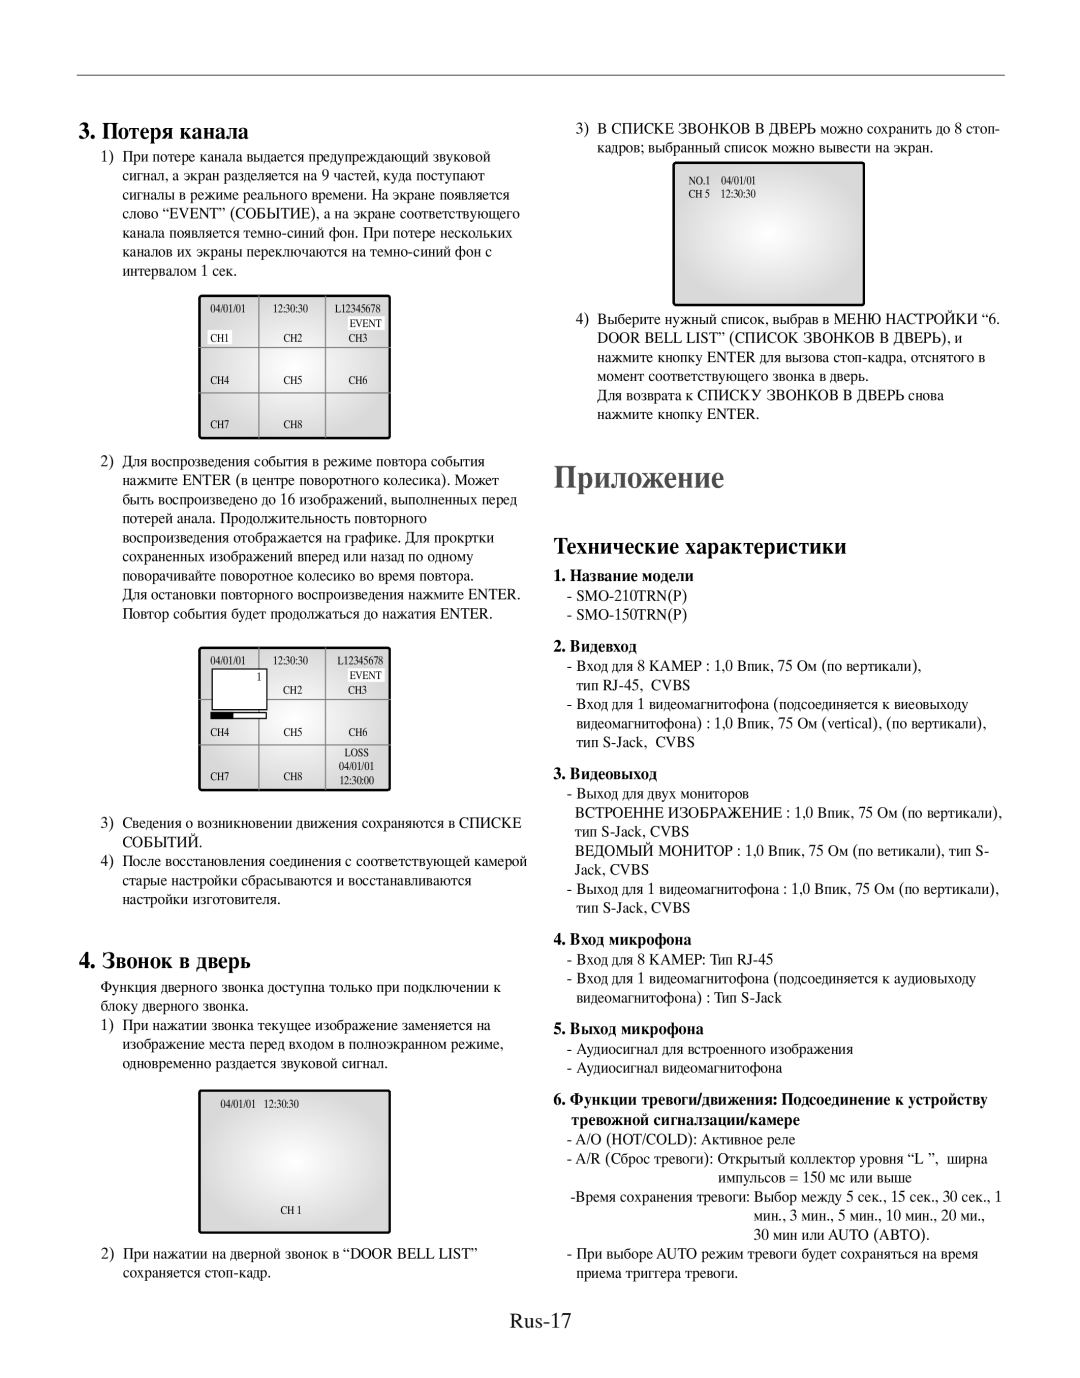 Samsung SMO-210MP/UMG, SMO-210TRP manual жение, 3. отеря канала, ехнические характеристики, Rus-17 